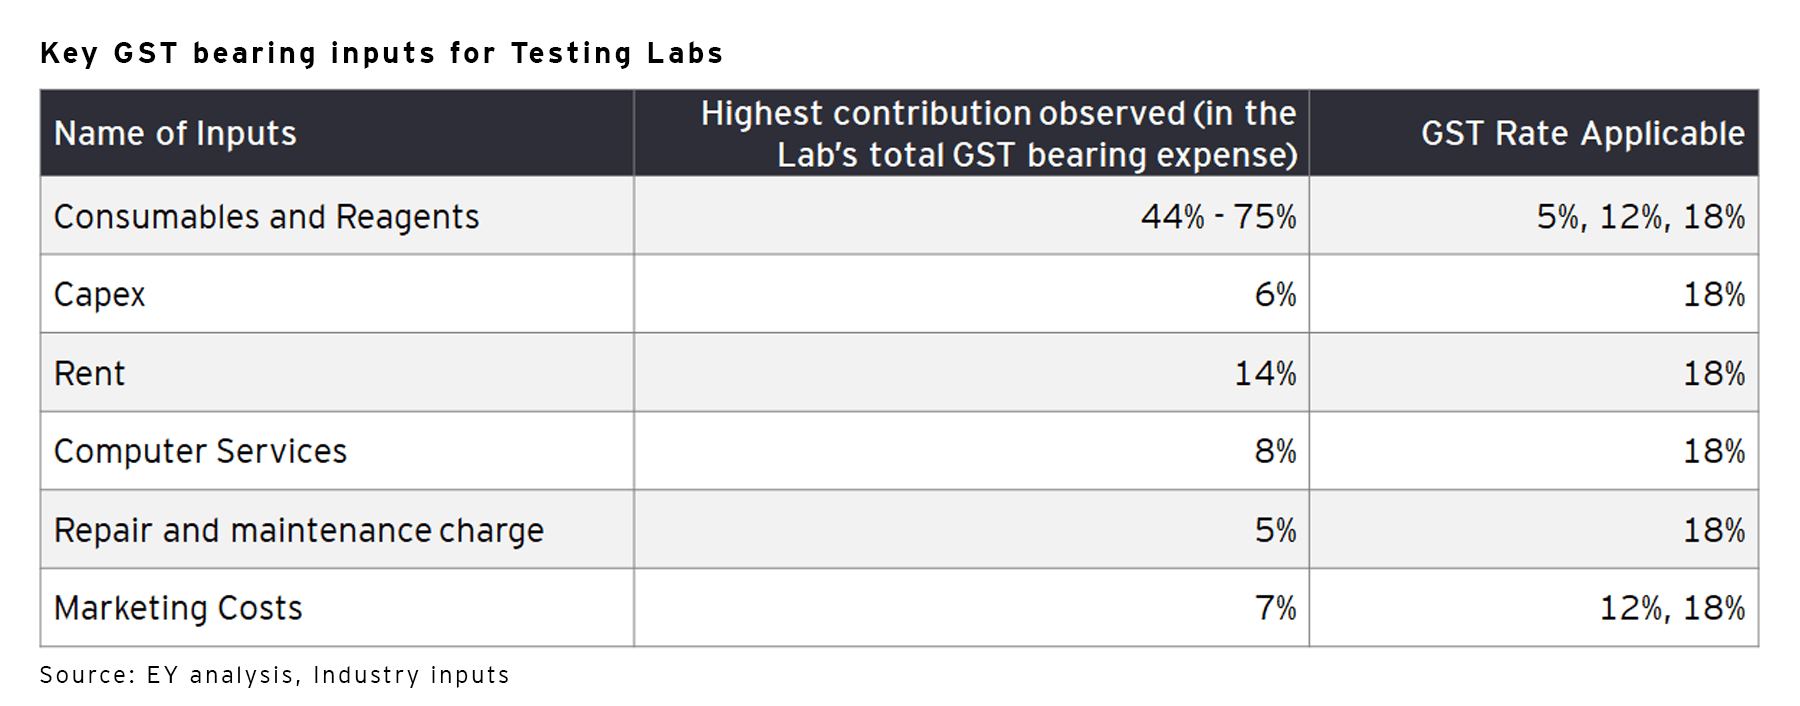 Key bearing GST inputs foe testing labs 